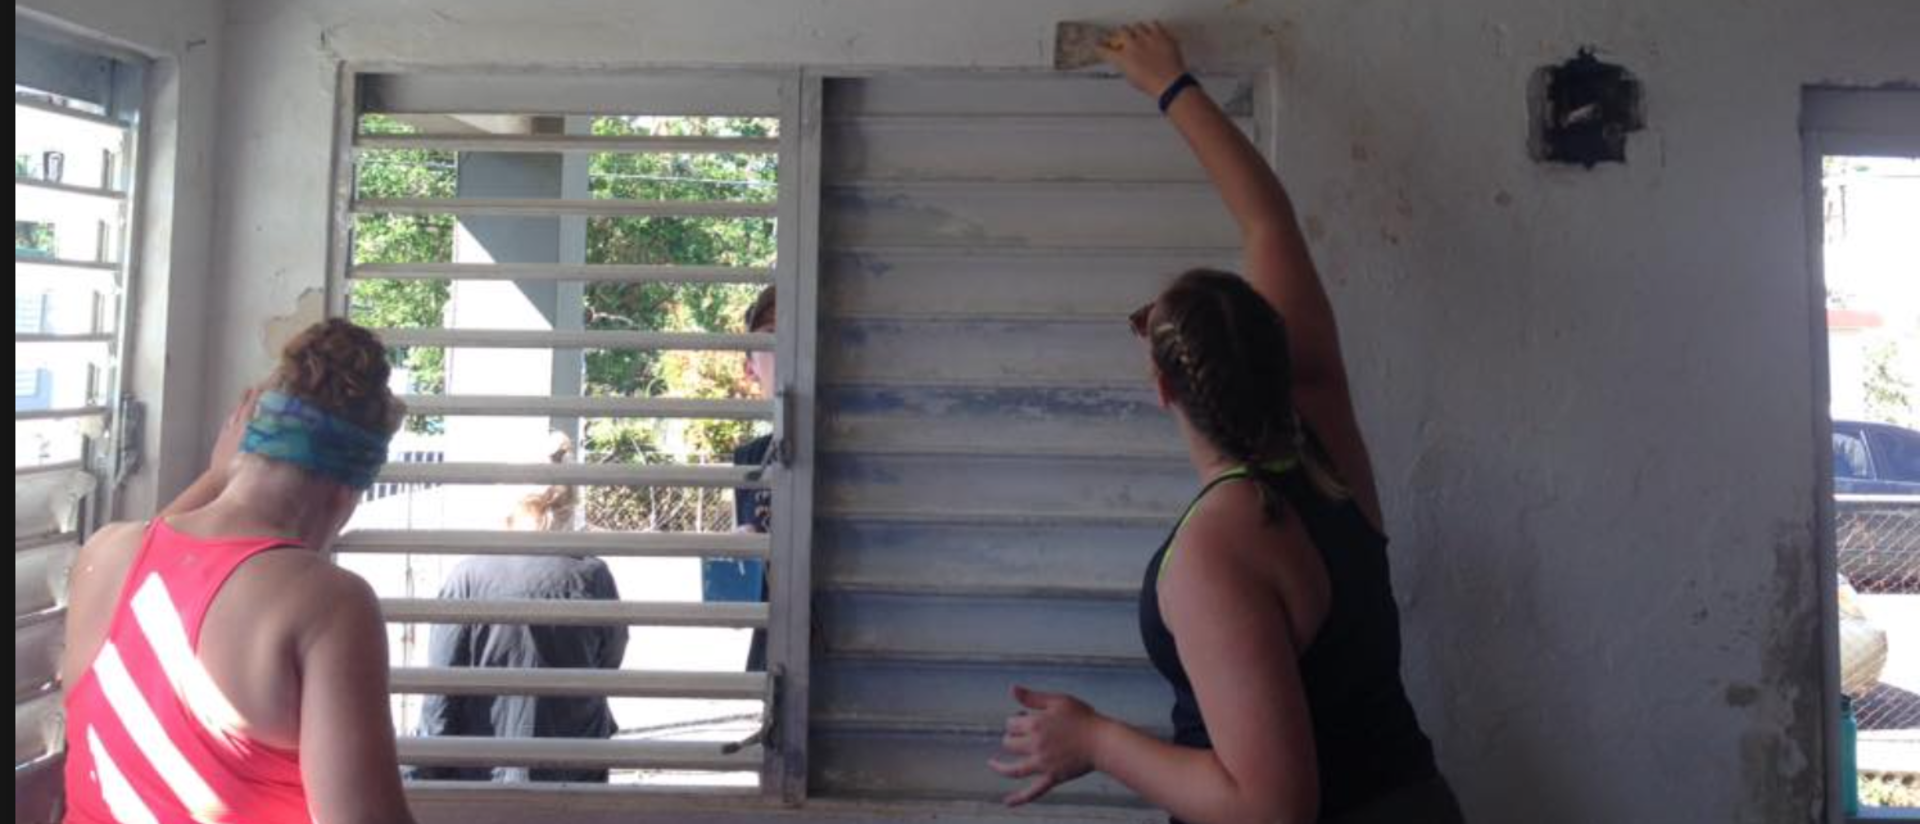 Carlie Rau helps restore a home in Puerto Rico